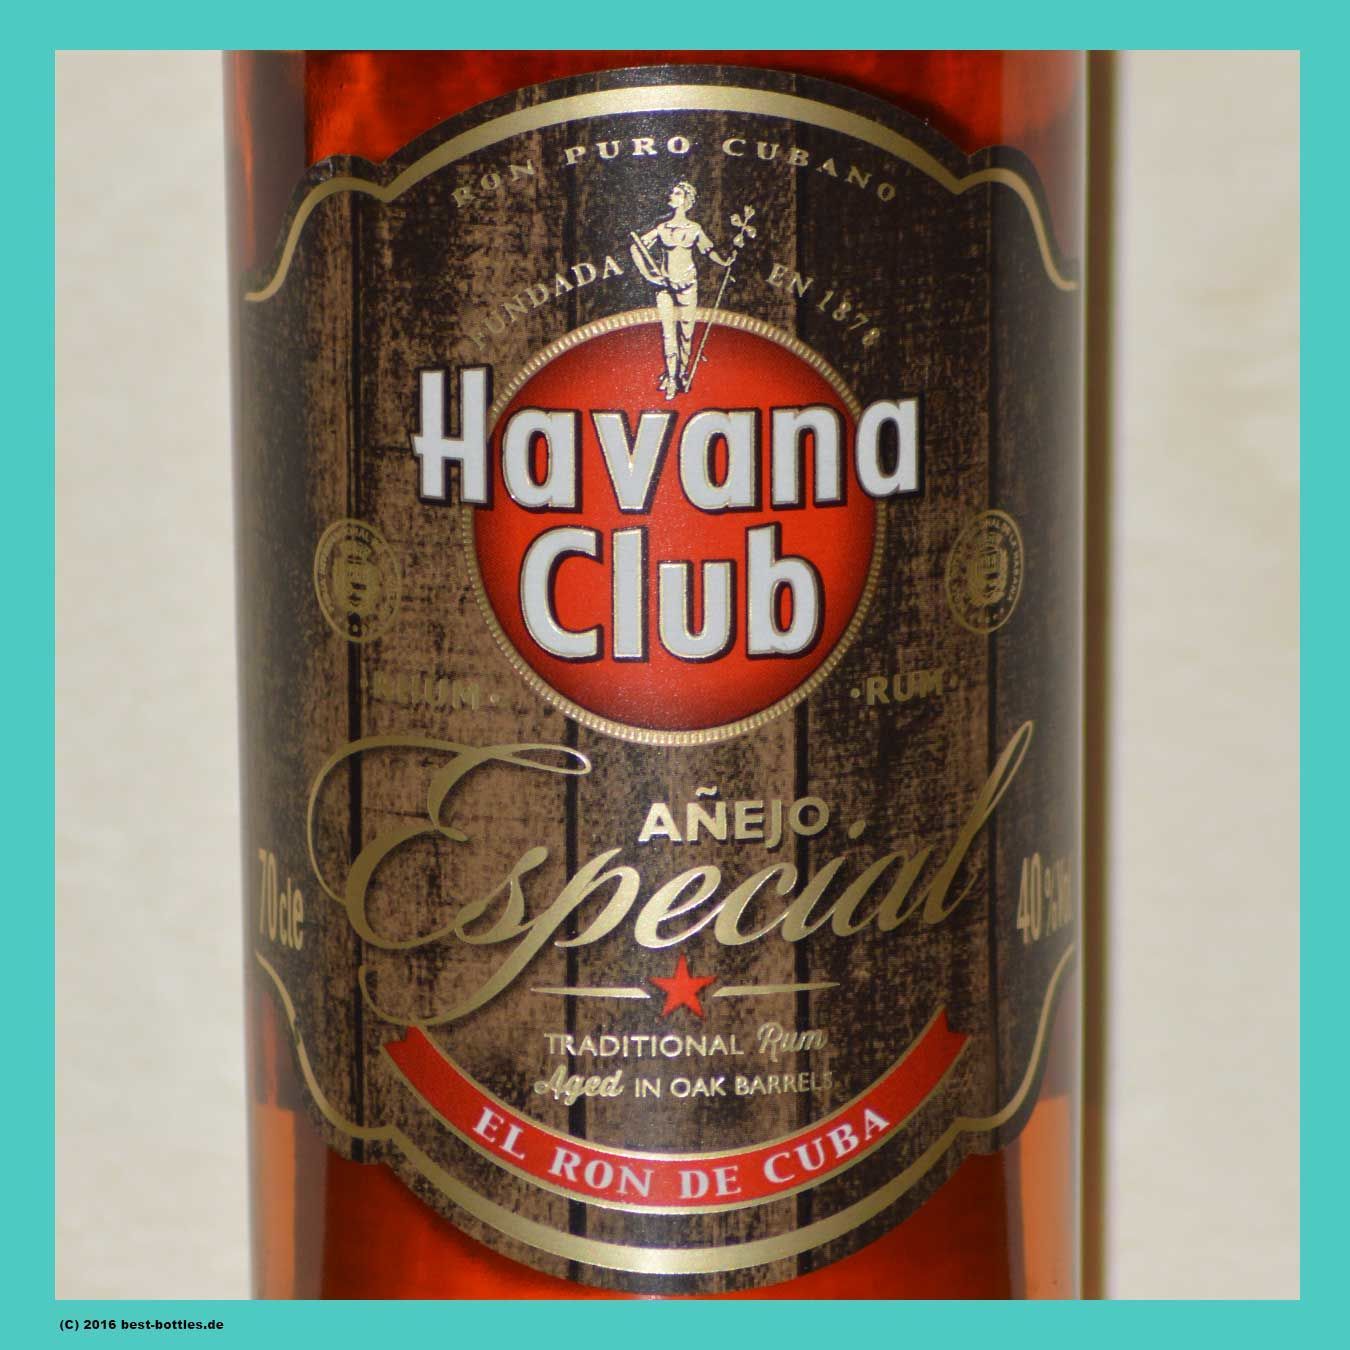 Havana Club Añejo Especial l 0,7 RUM